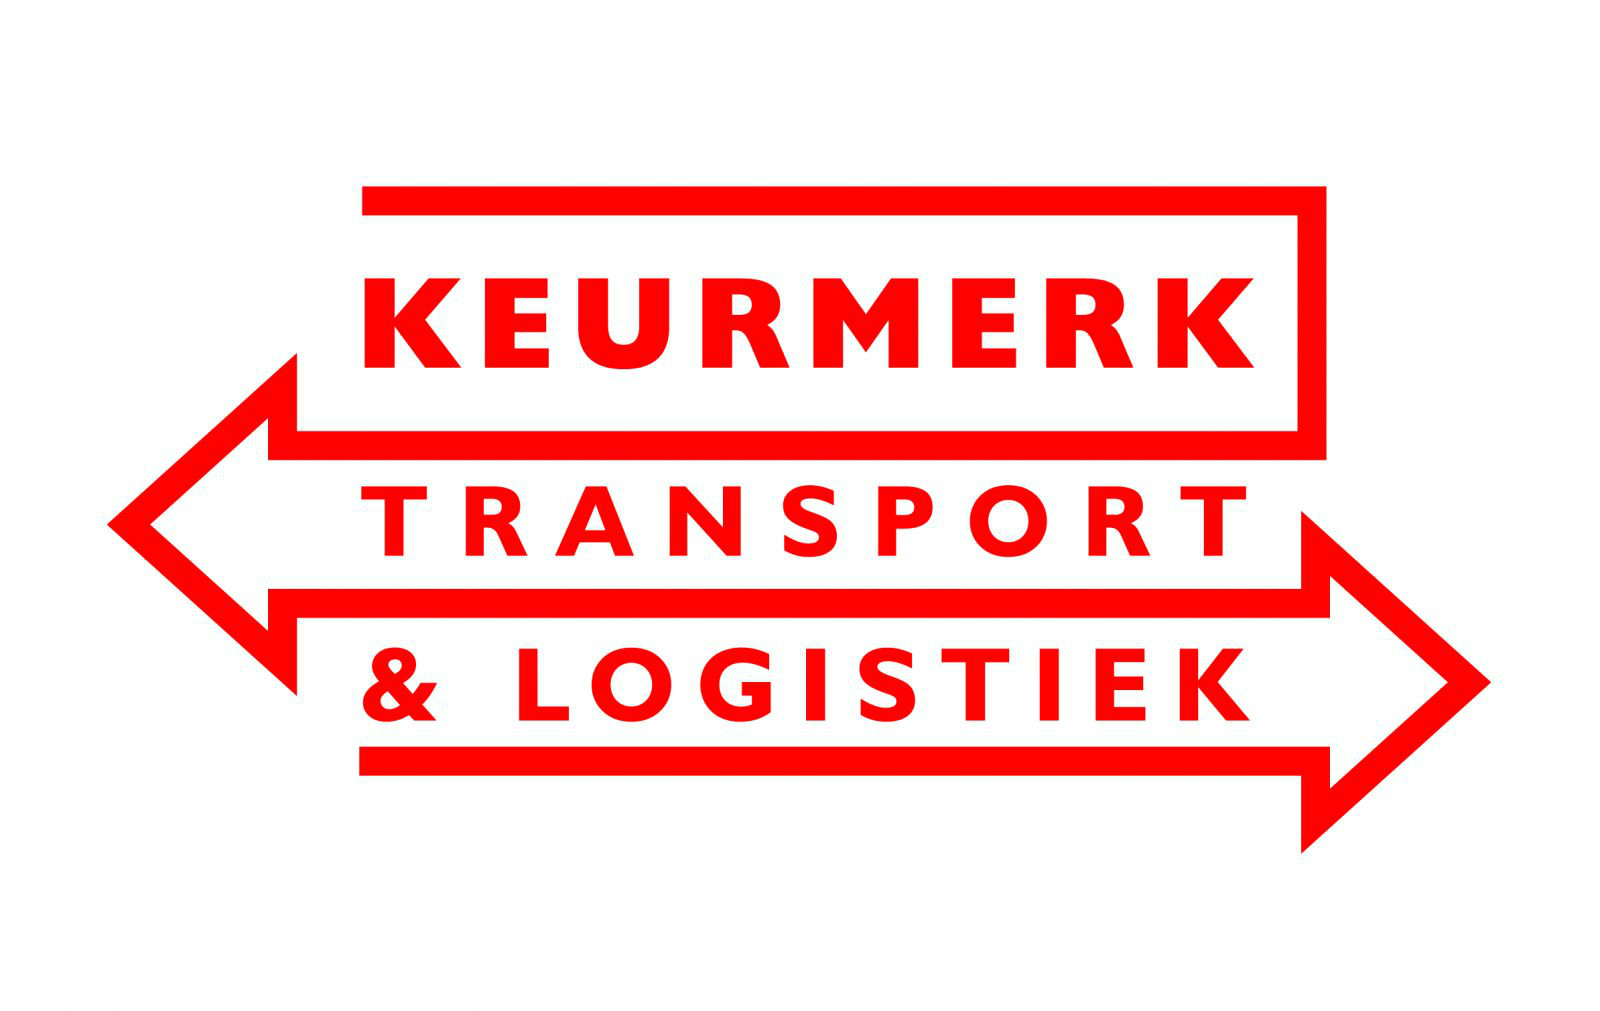 Keurmerk transport & Logistiek